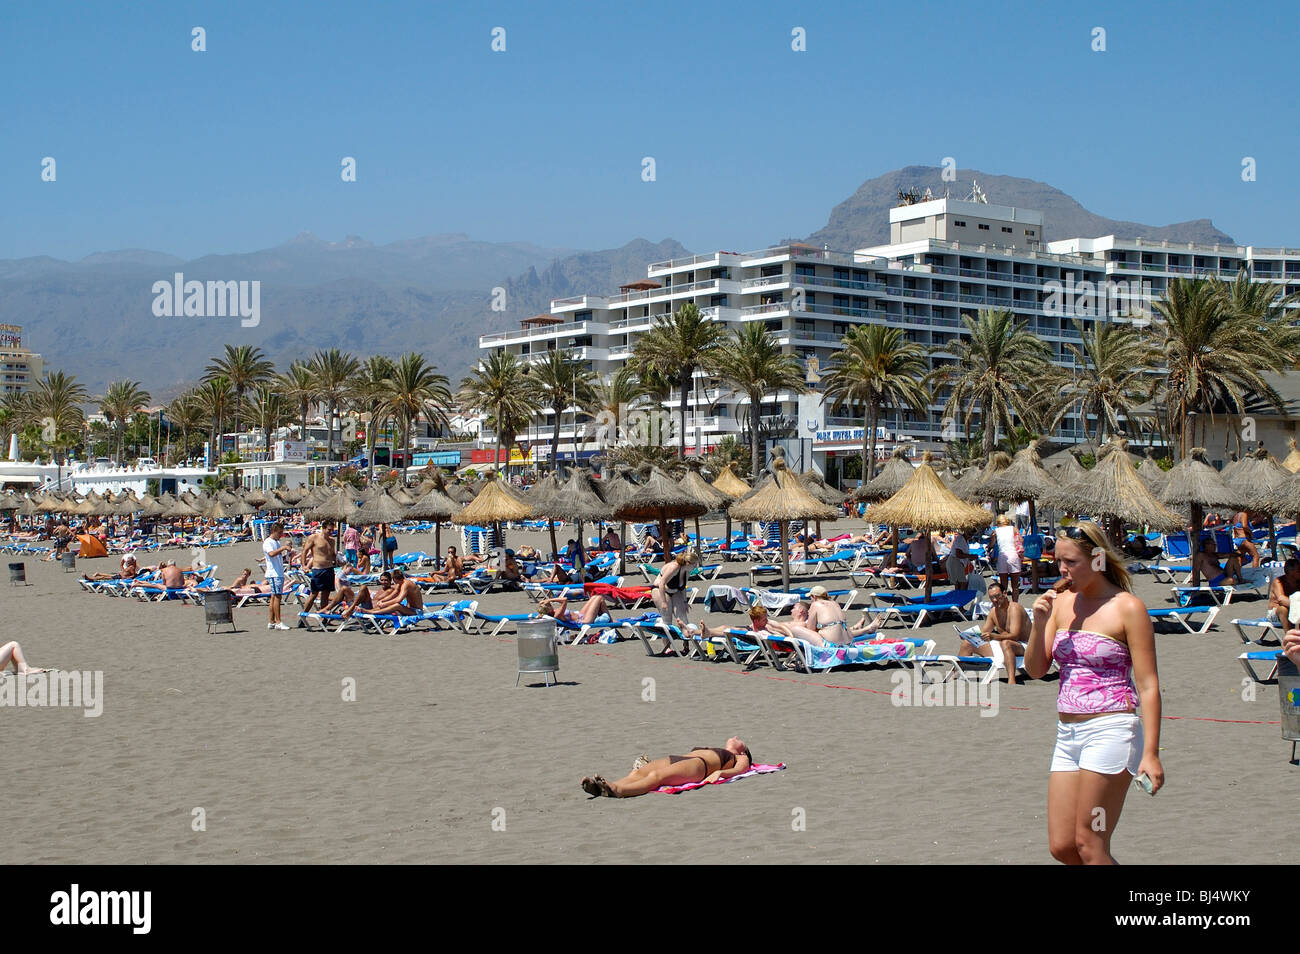 Espagne, Canaries, Tenerife Playa de las Americas, plage Banque D'Images